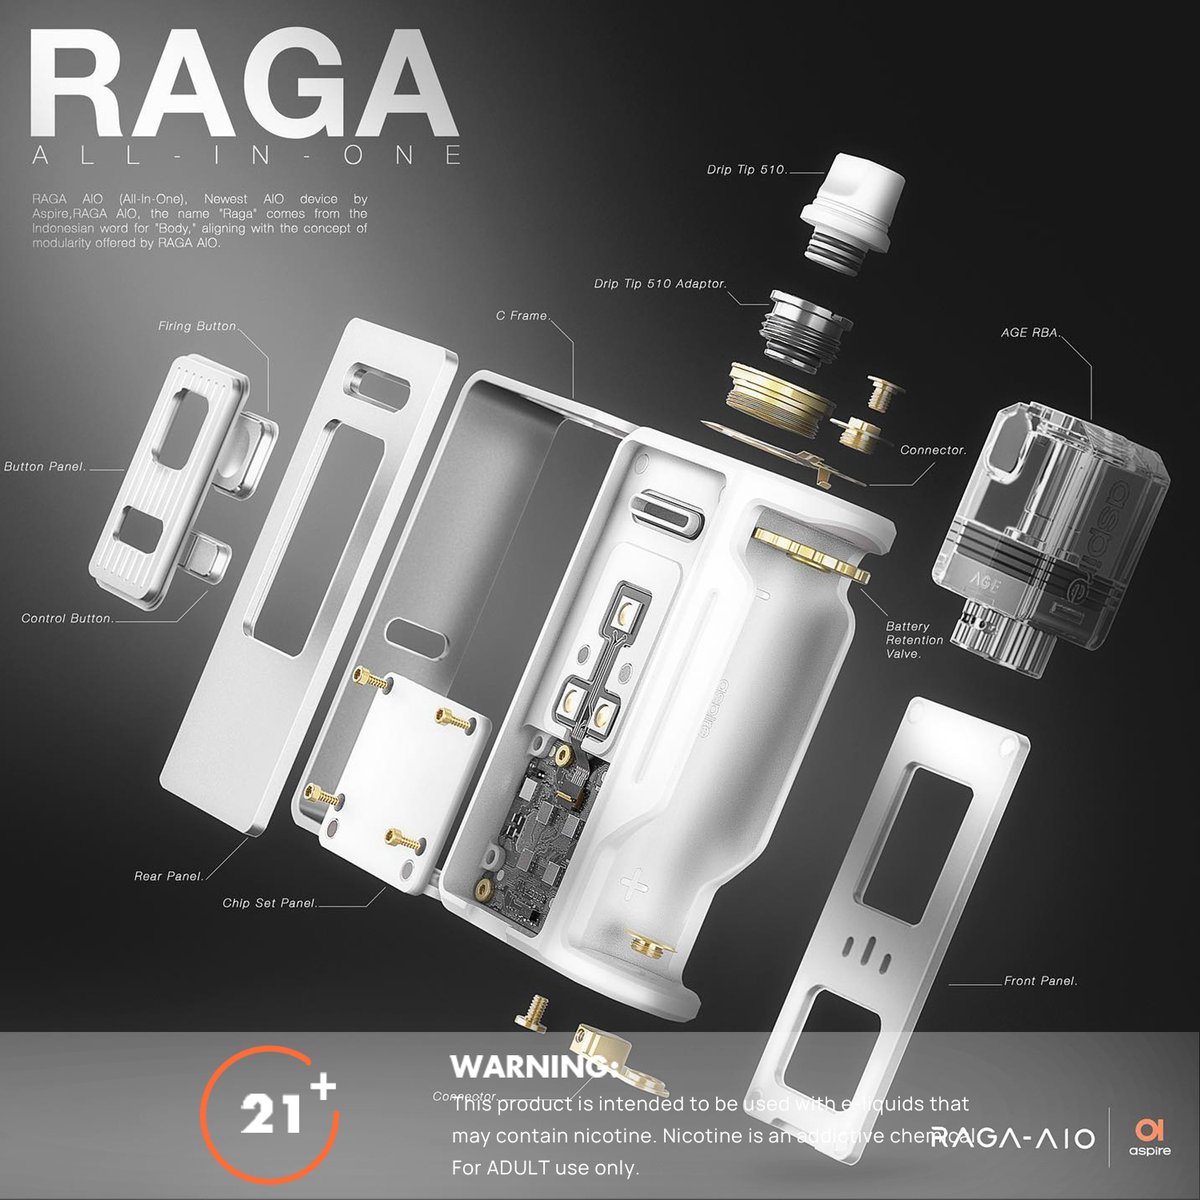 RAGA AIO全体は簡単に分解できるように作られており、24Kゴールドメッキで飾られた金属部品が大きな存在感を示しています。
aspirecig.com/raga-series/ra…
.
.
#ragaaio #aspireragaaio #aspireaio #電子タバコ #VAPE
警告：20歳以上の成人のみご利用できます